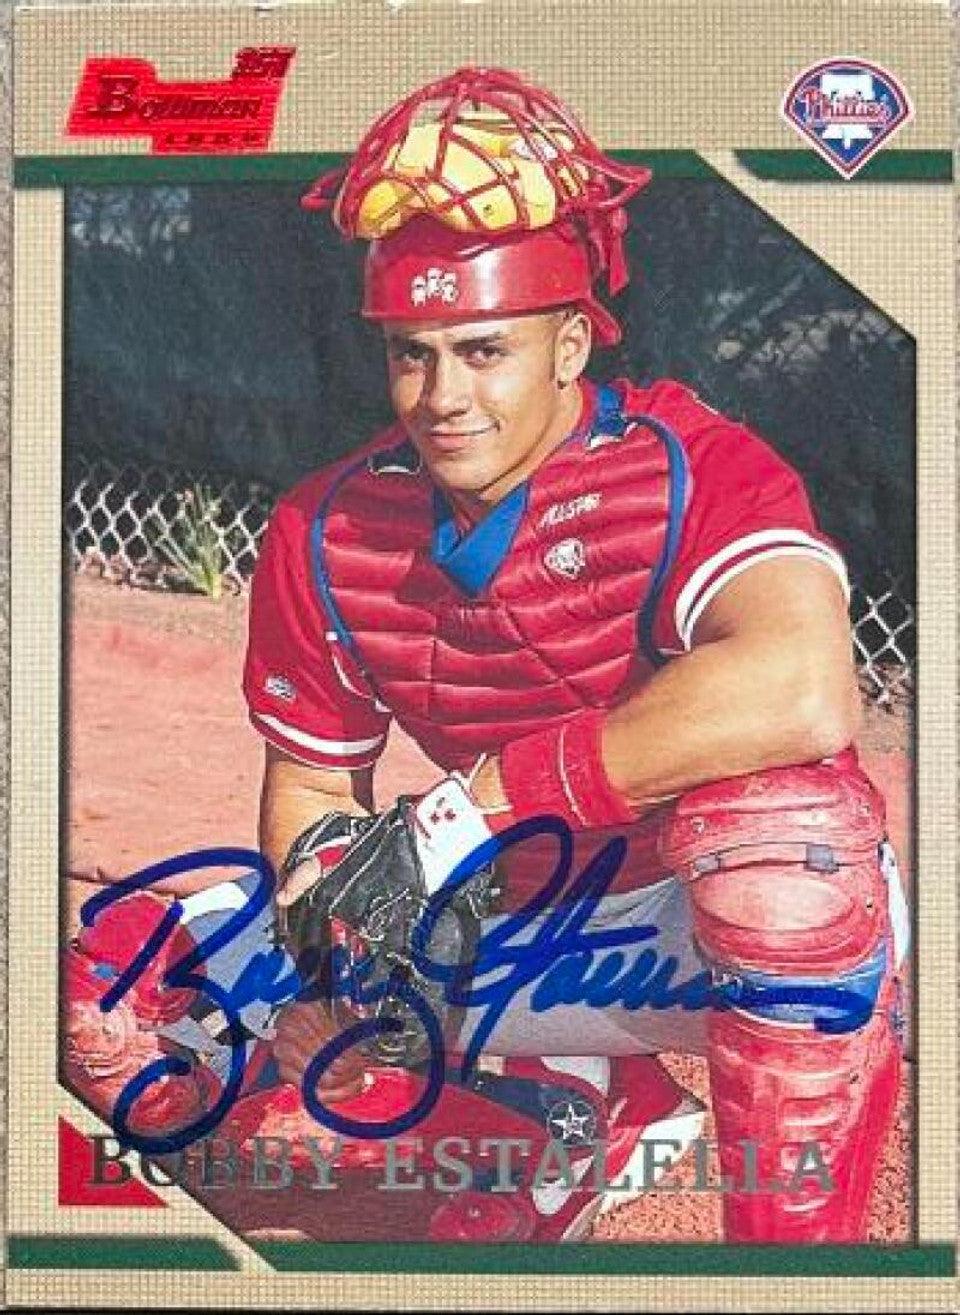 1996 Bowman Baseball Autographs